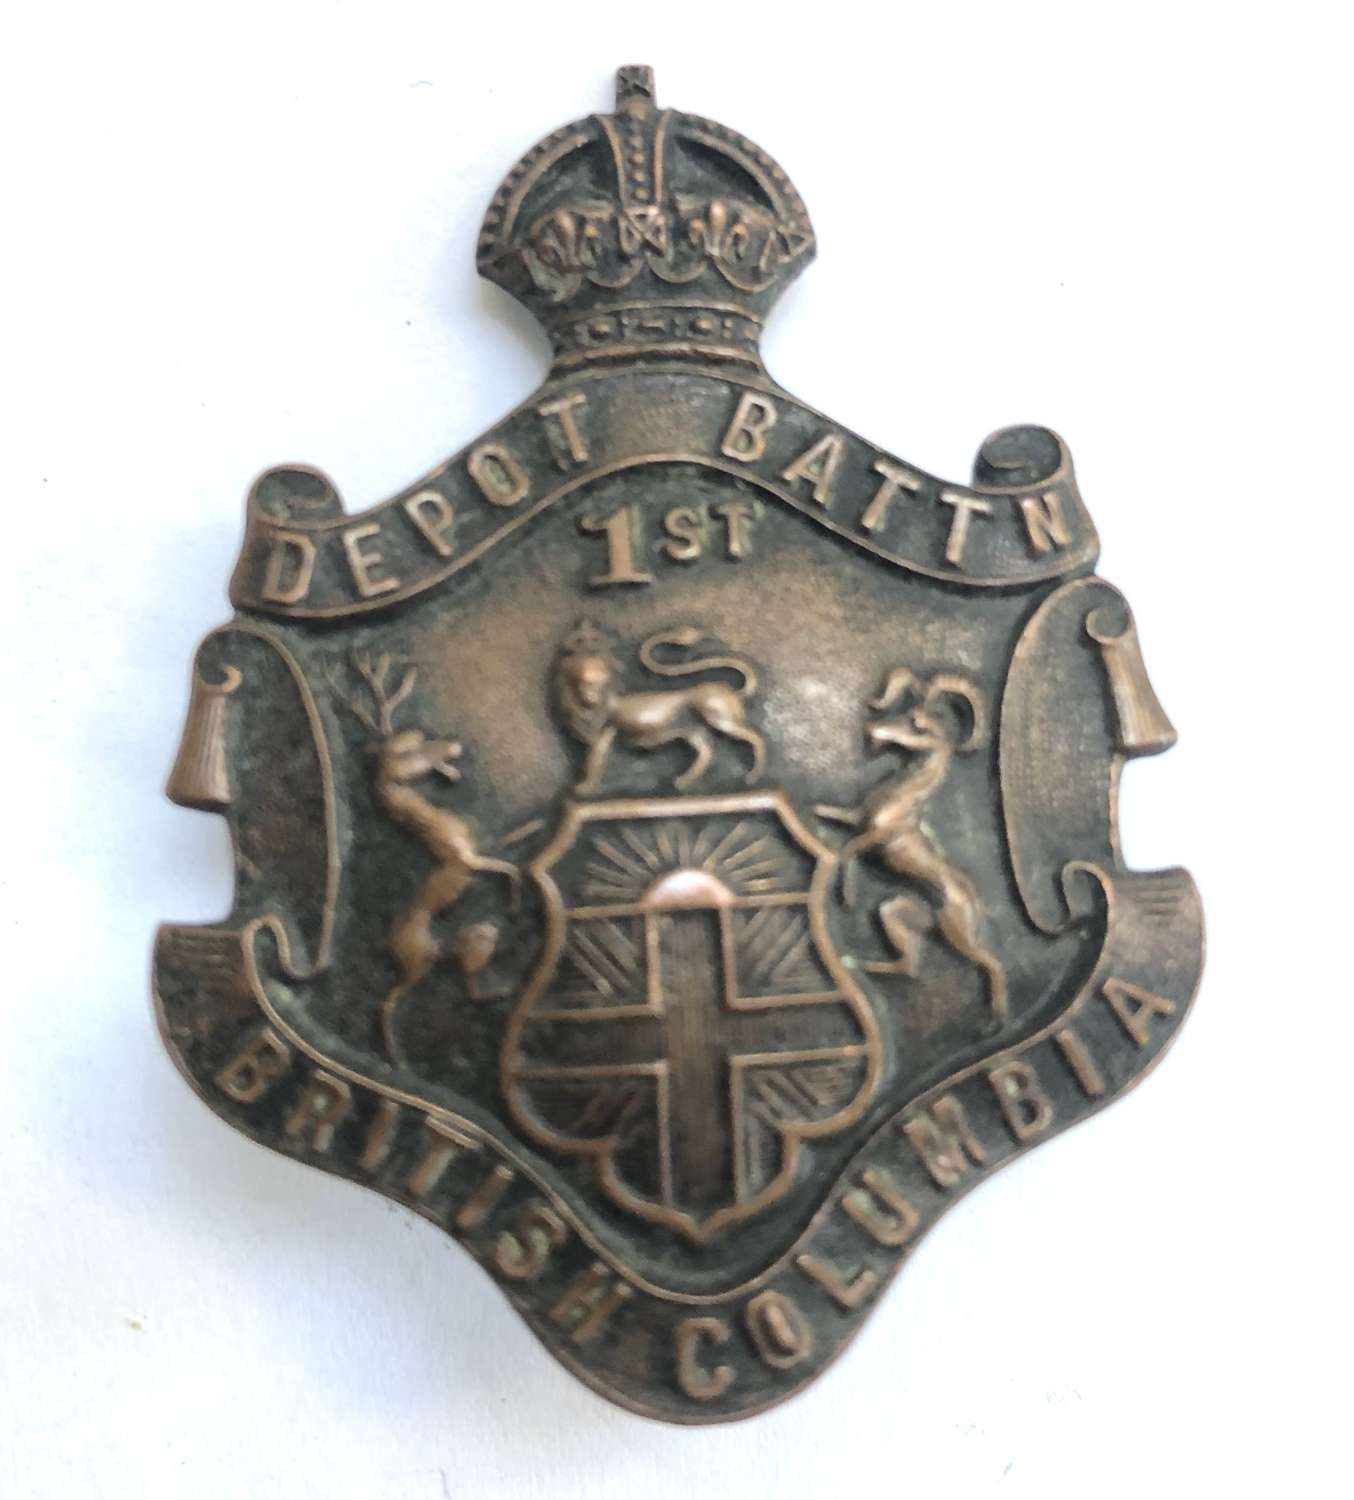 Canadian 1st British Columbia Depot Bn. CEF cap badge by Allan